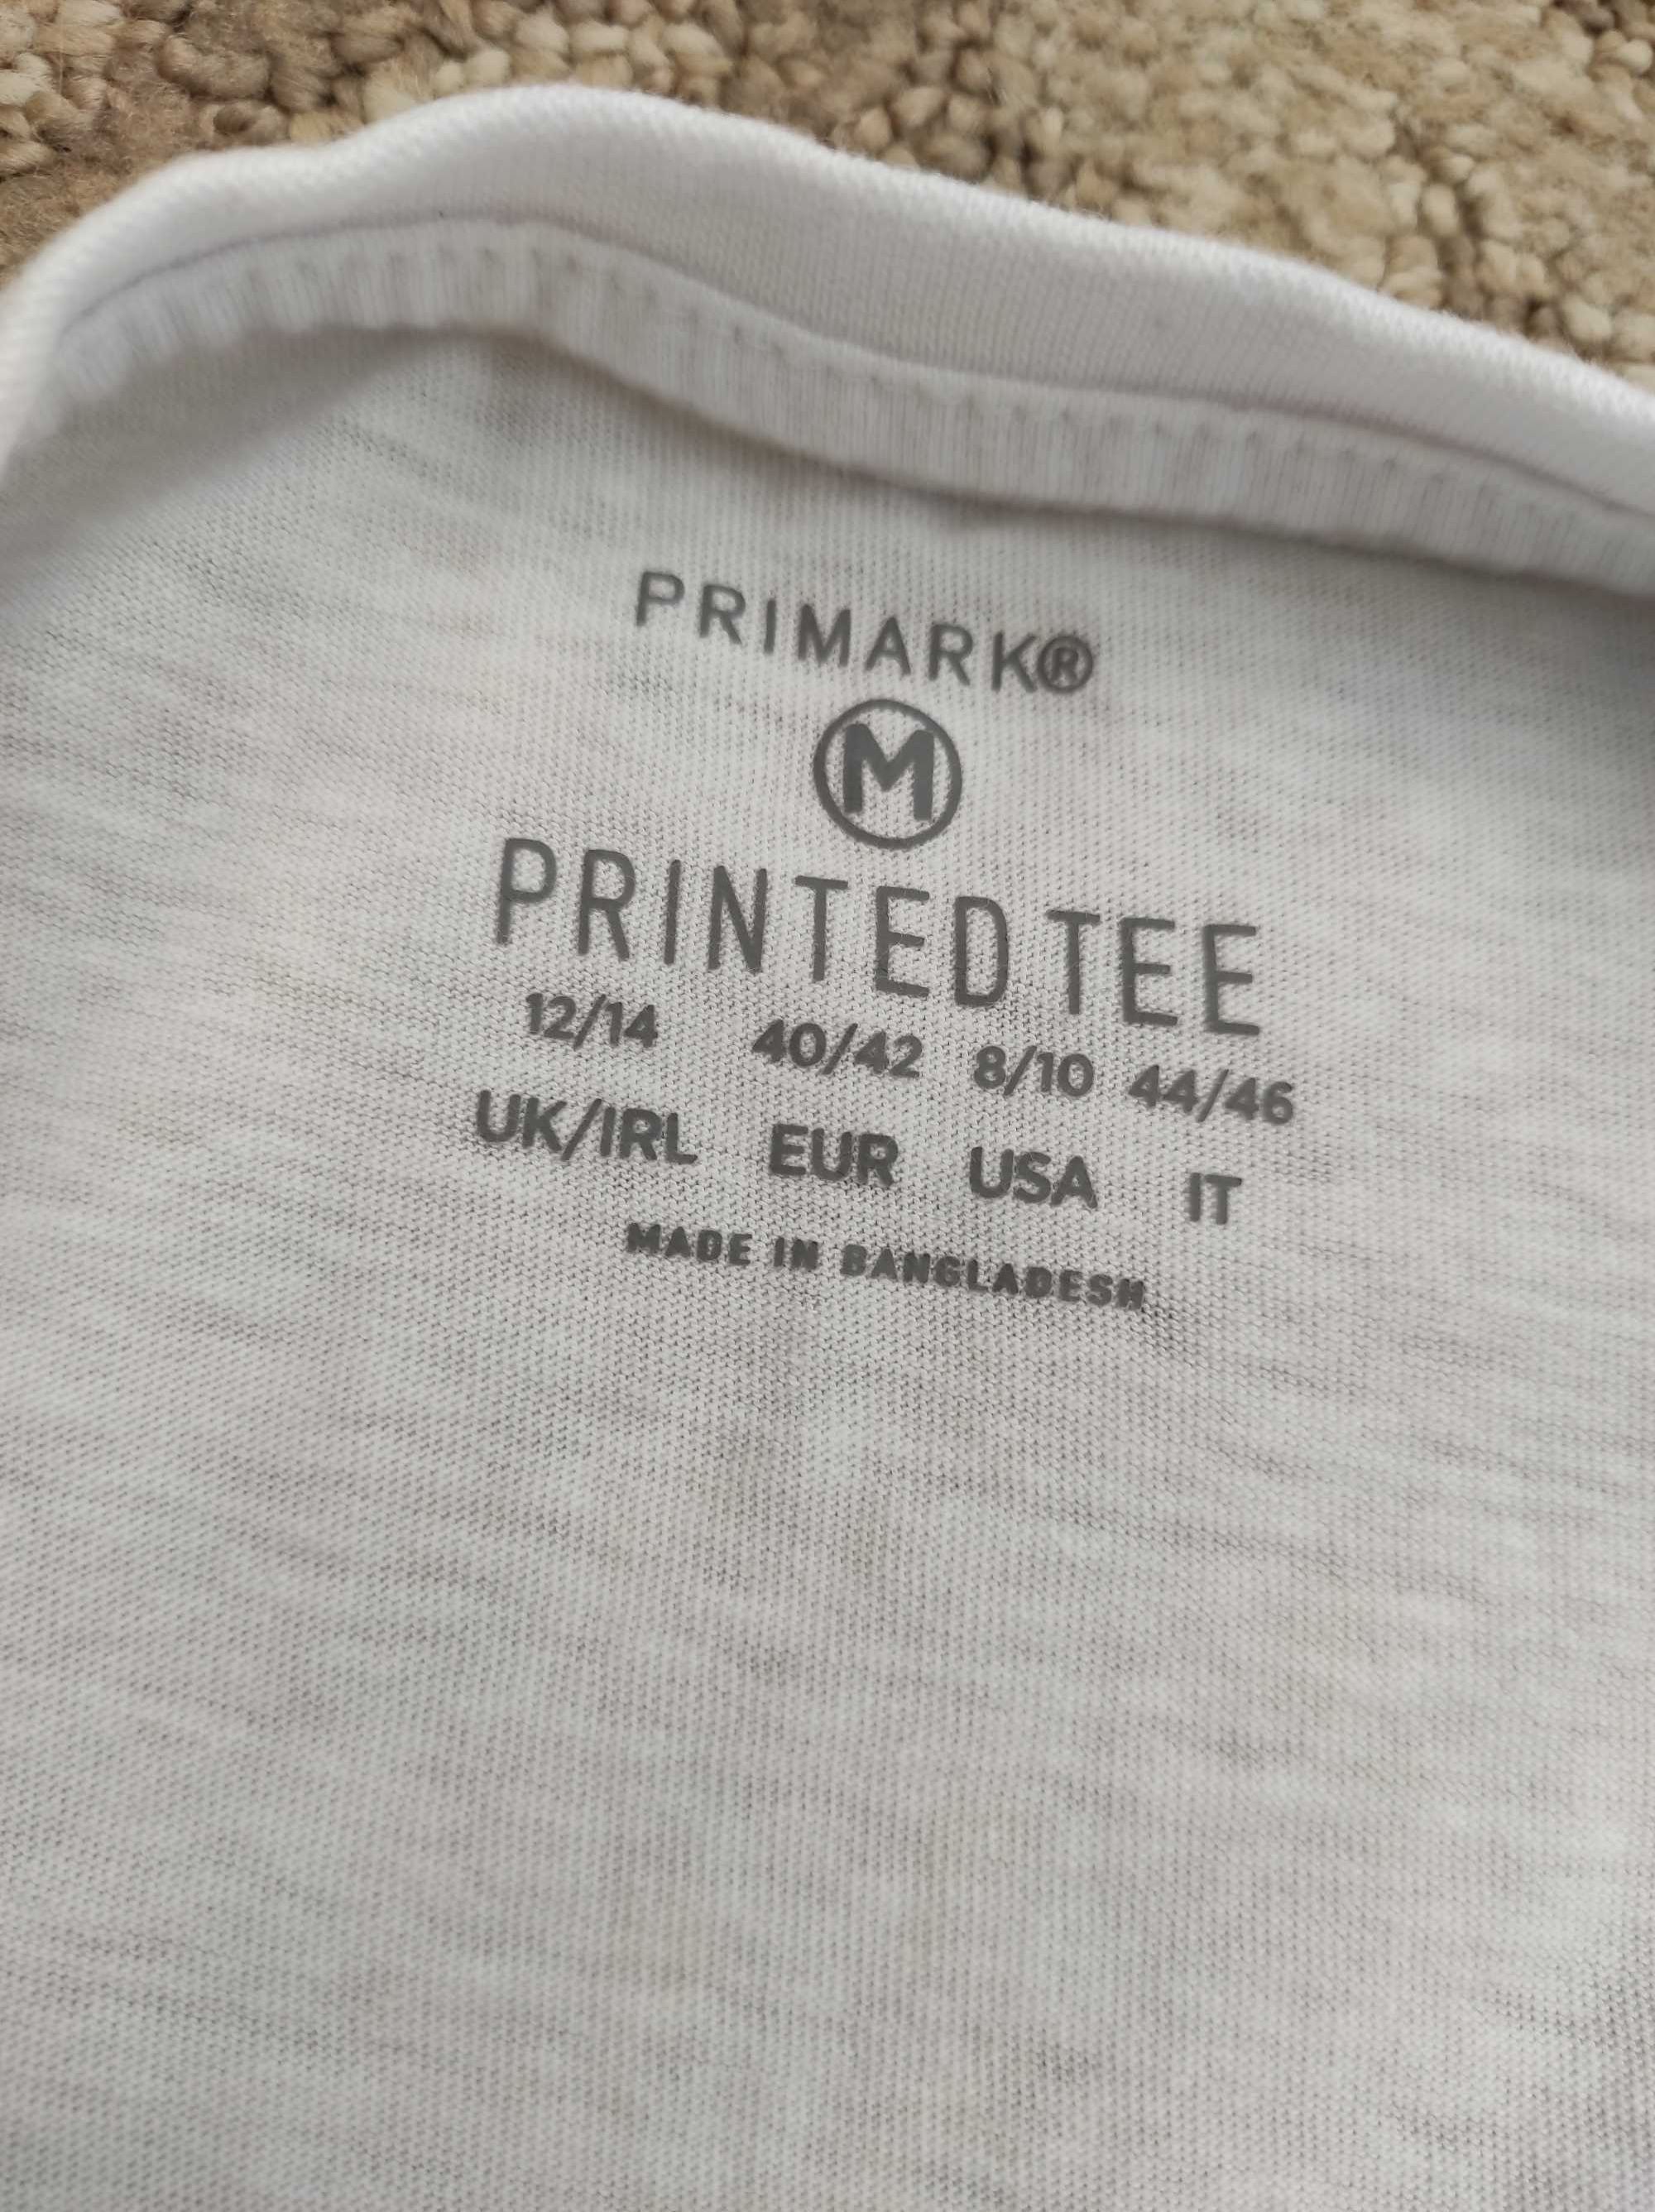 Biała bluzka koszulka z napisami Primark